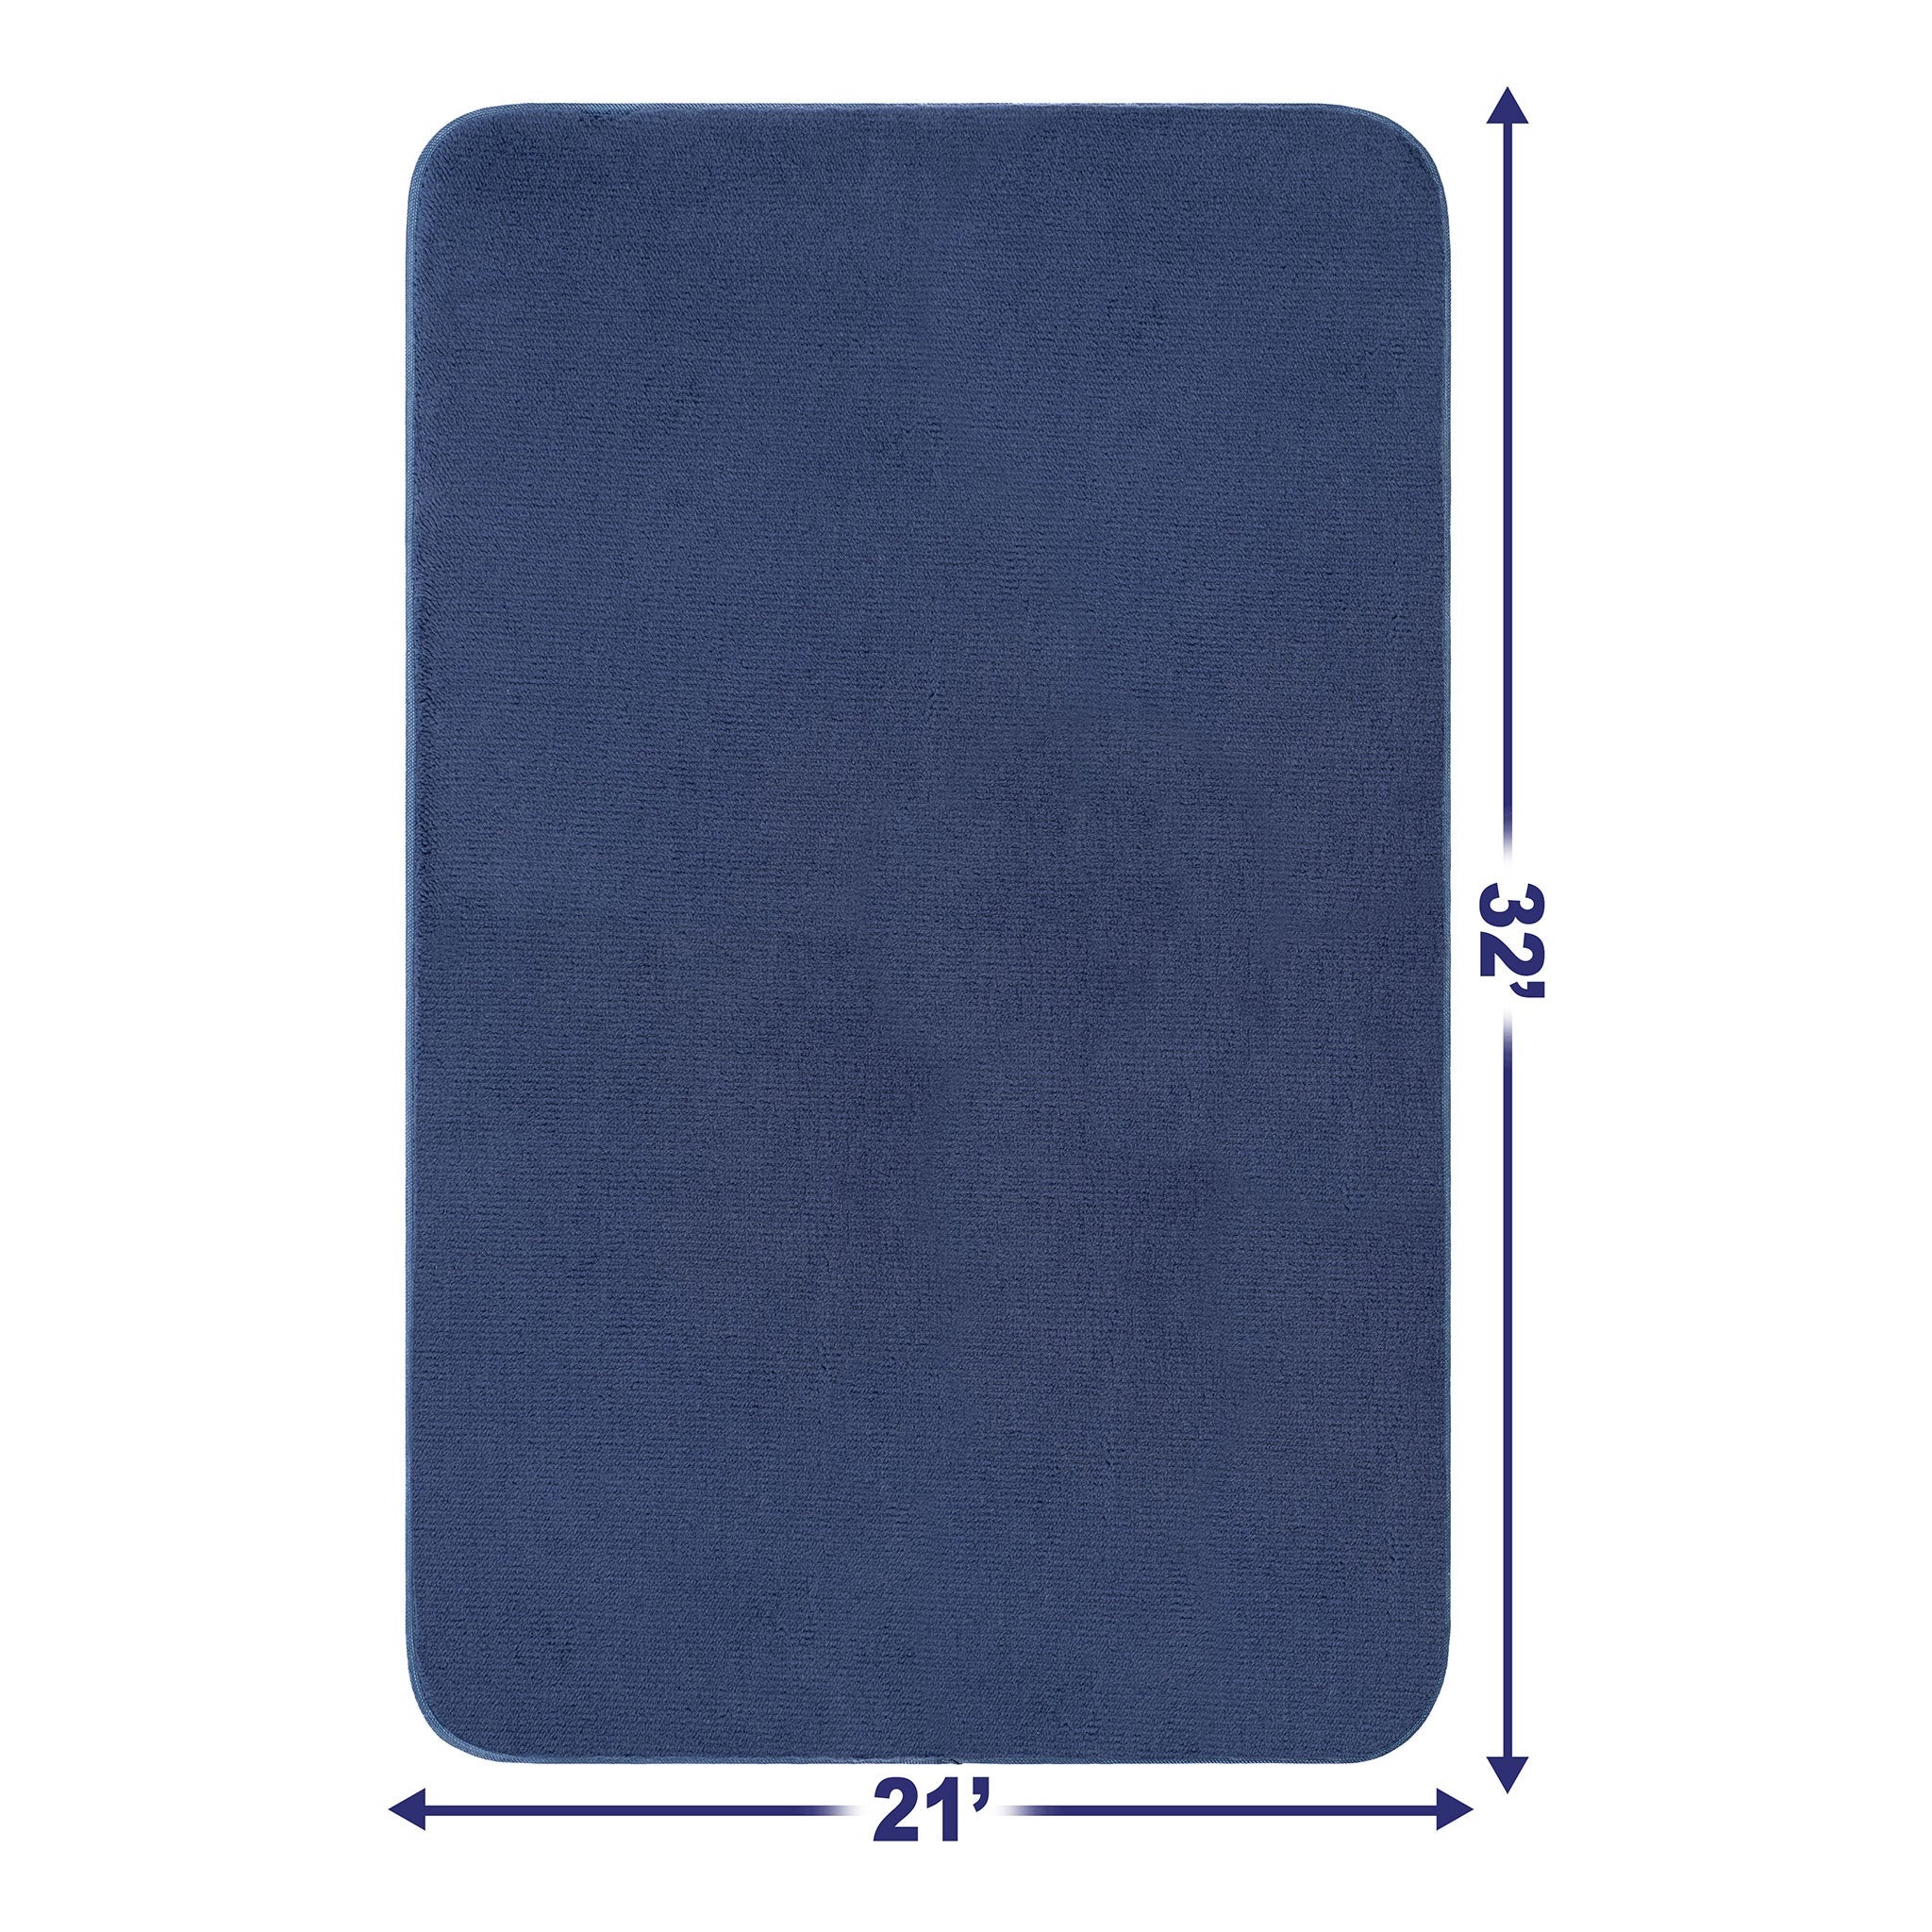 American Soft Linen - Fluffy Foamed Non-Slip Bath Rug-21x32 Inch - Navy-Blue - 3